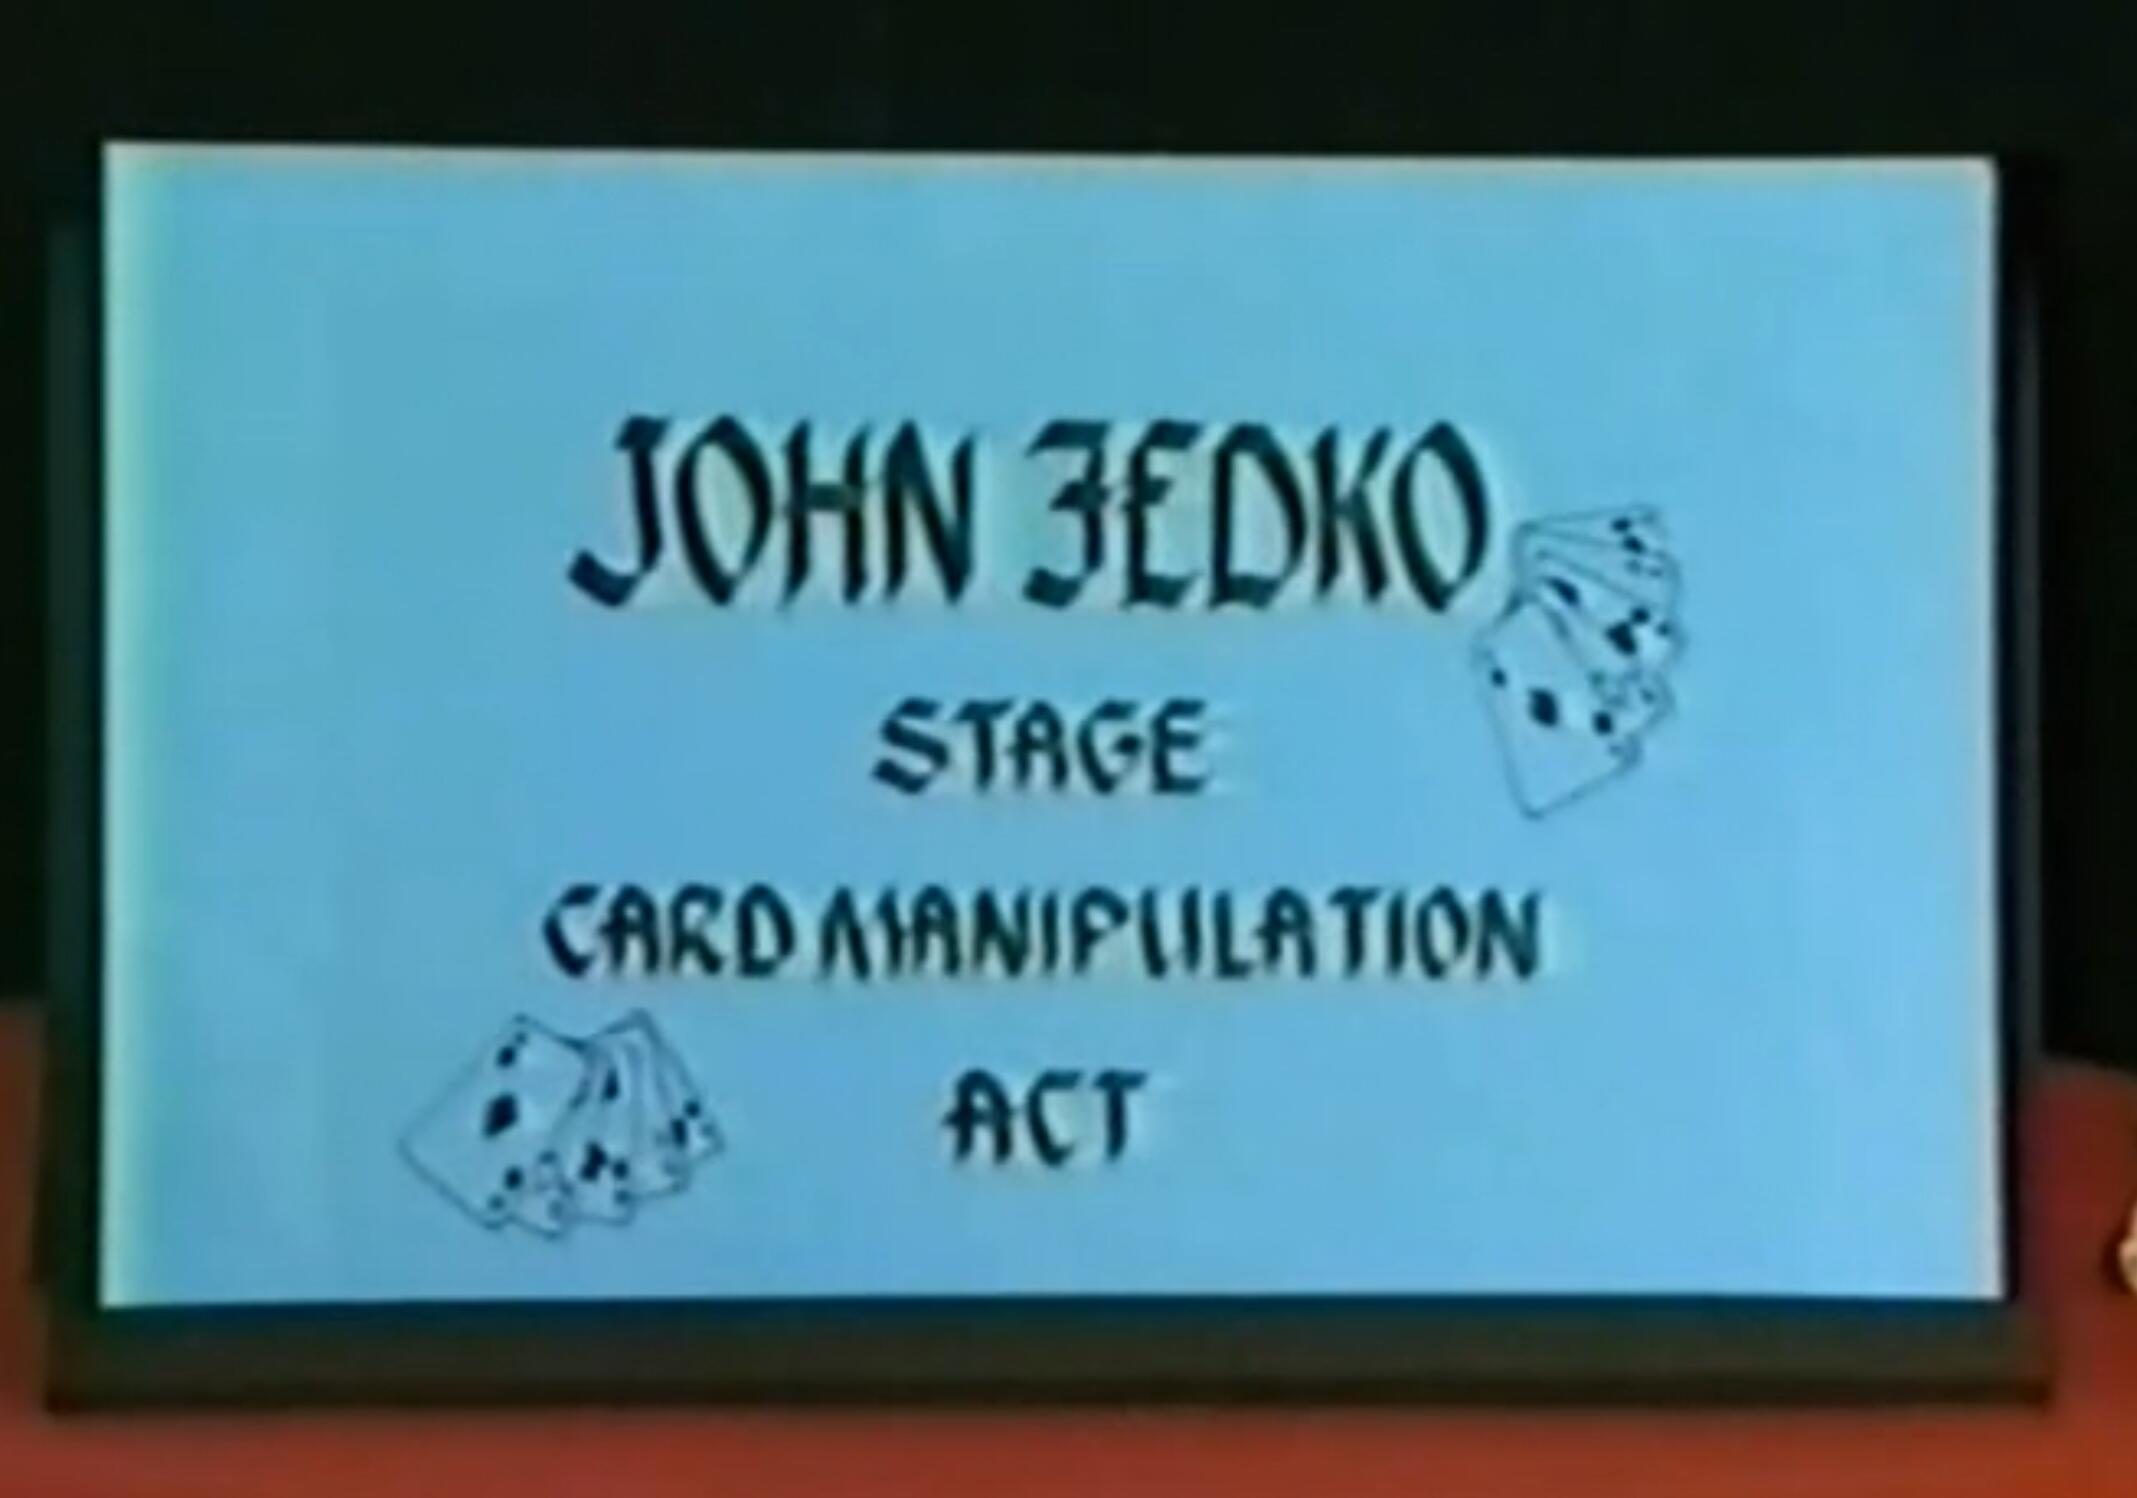 John Fedko - Stage Card Manipulation Act